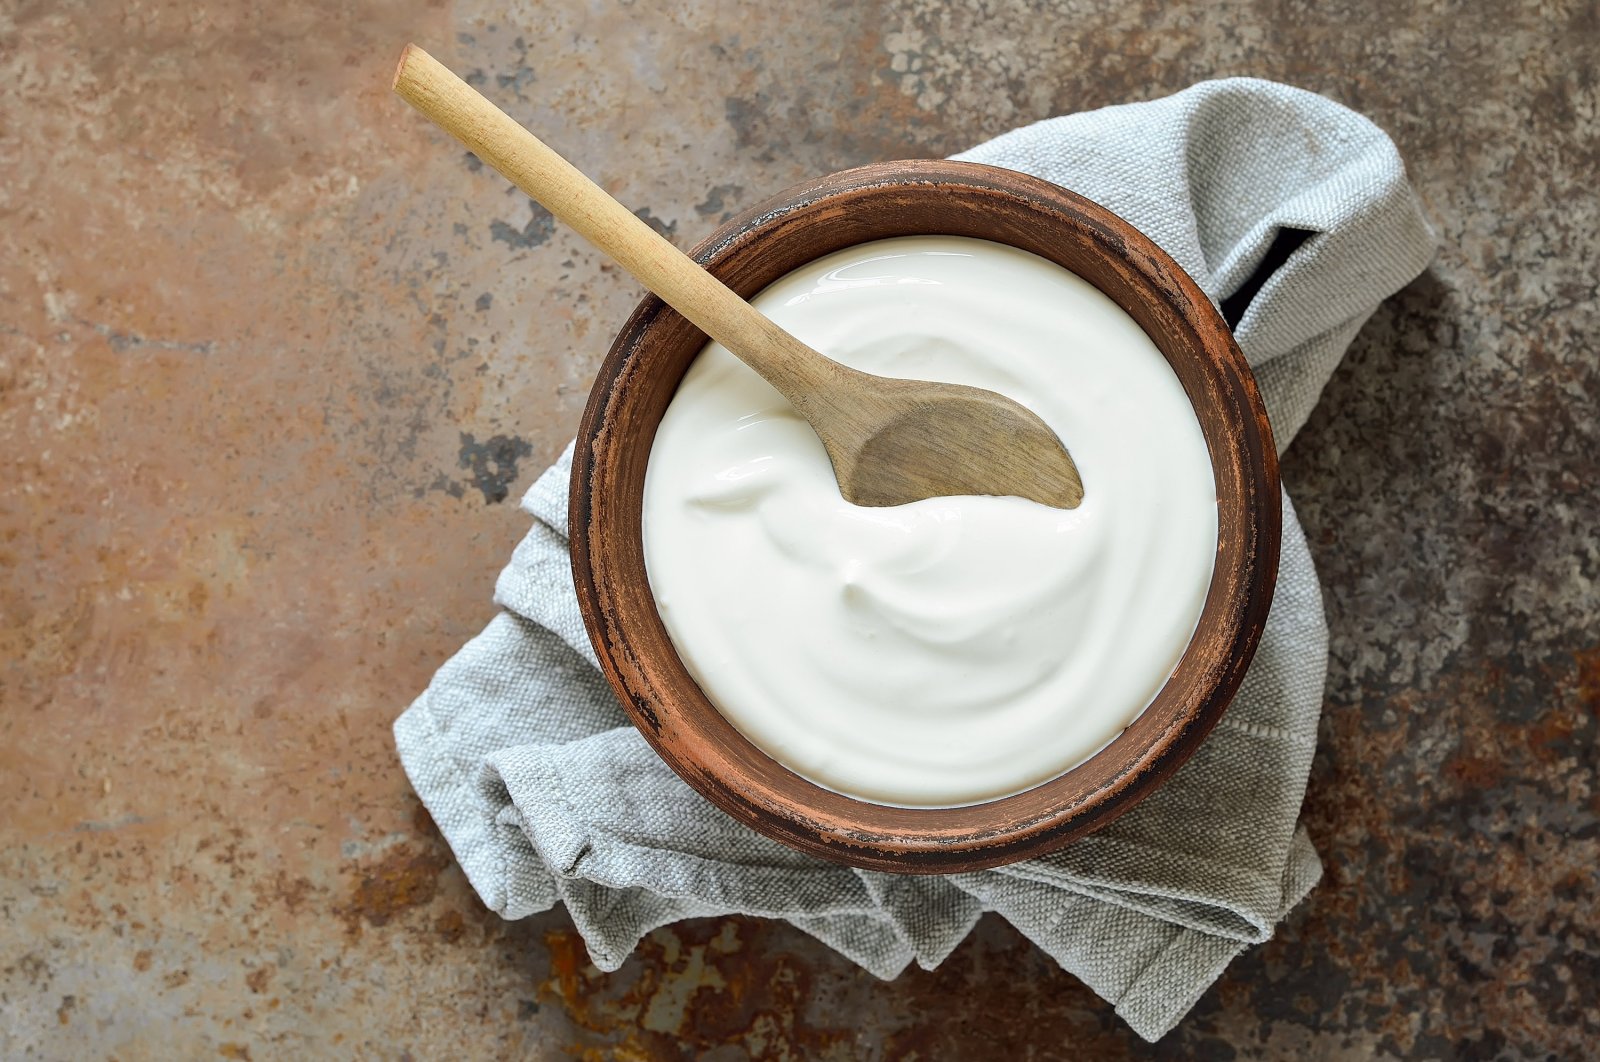 Many Turks would insist yogurt tastes best when it is made in earthenware pots, as per tradition. (Shutterstock Photo)